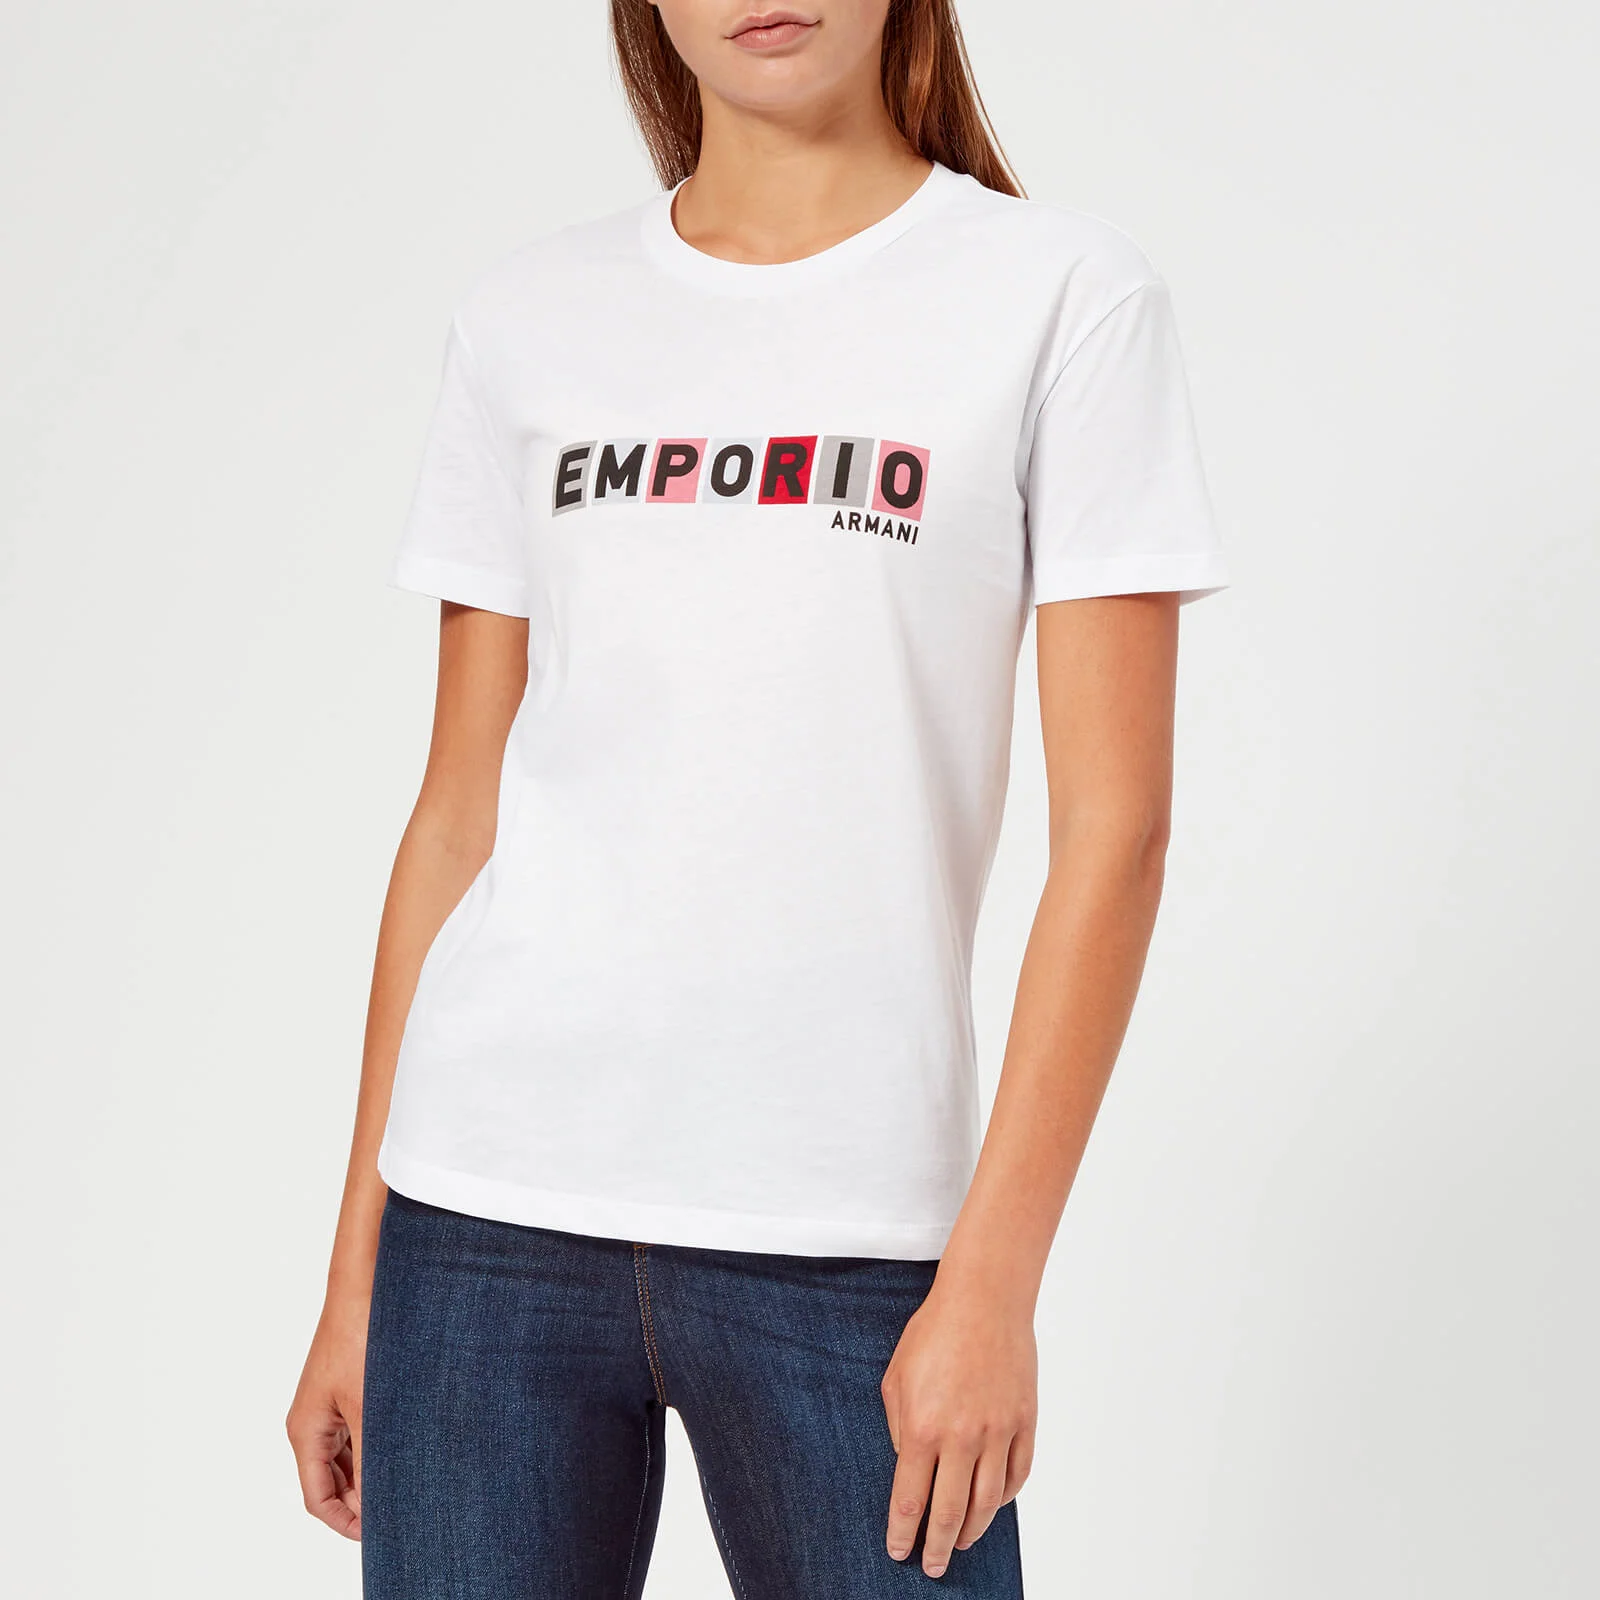 Emporio Armani Women's Emporio Block Logo T-Shirt - White Image 1